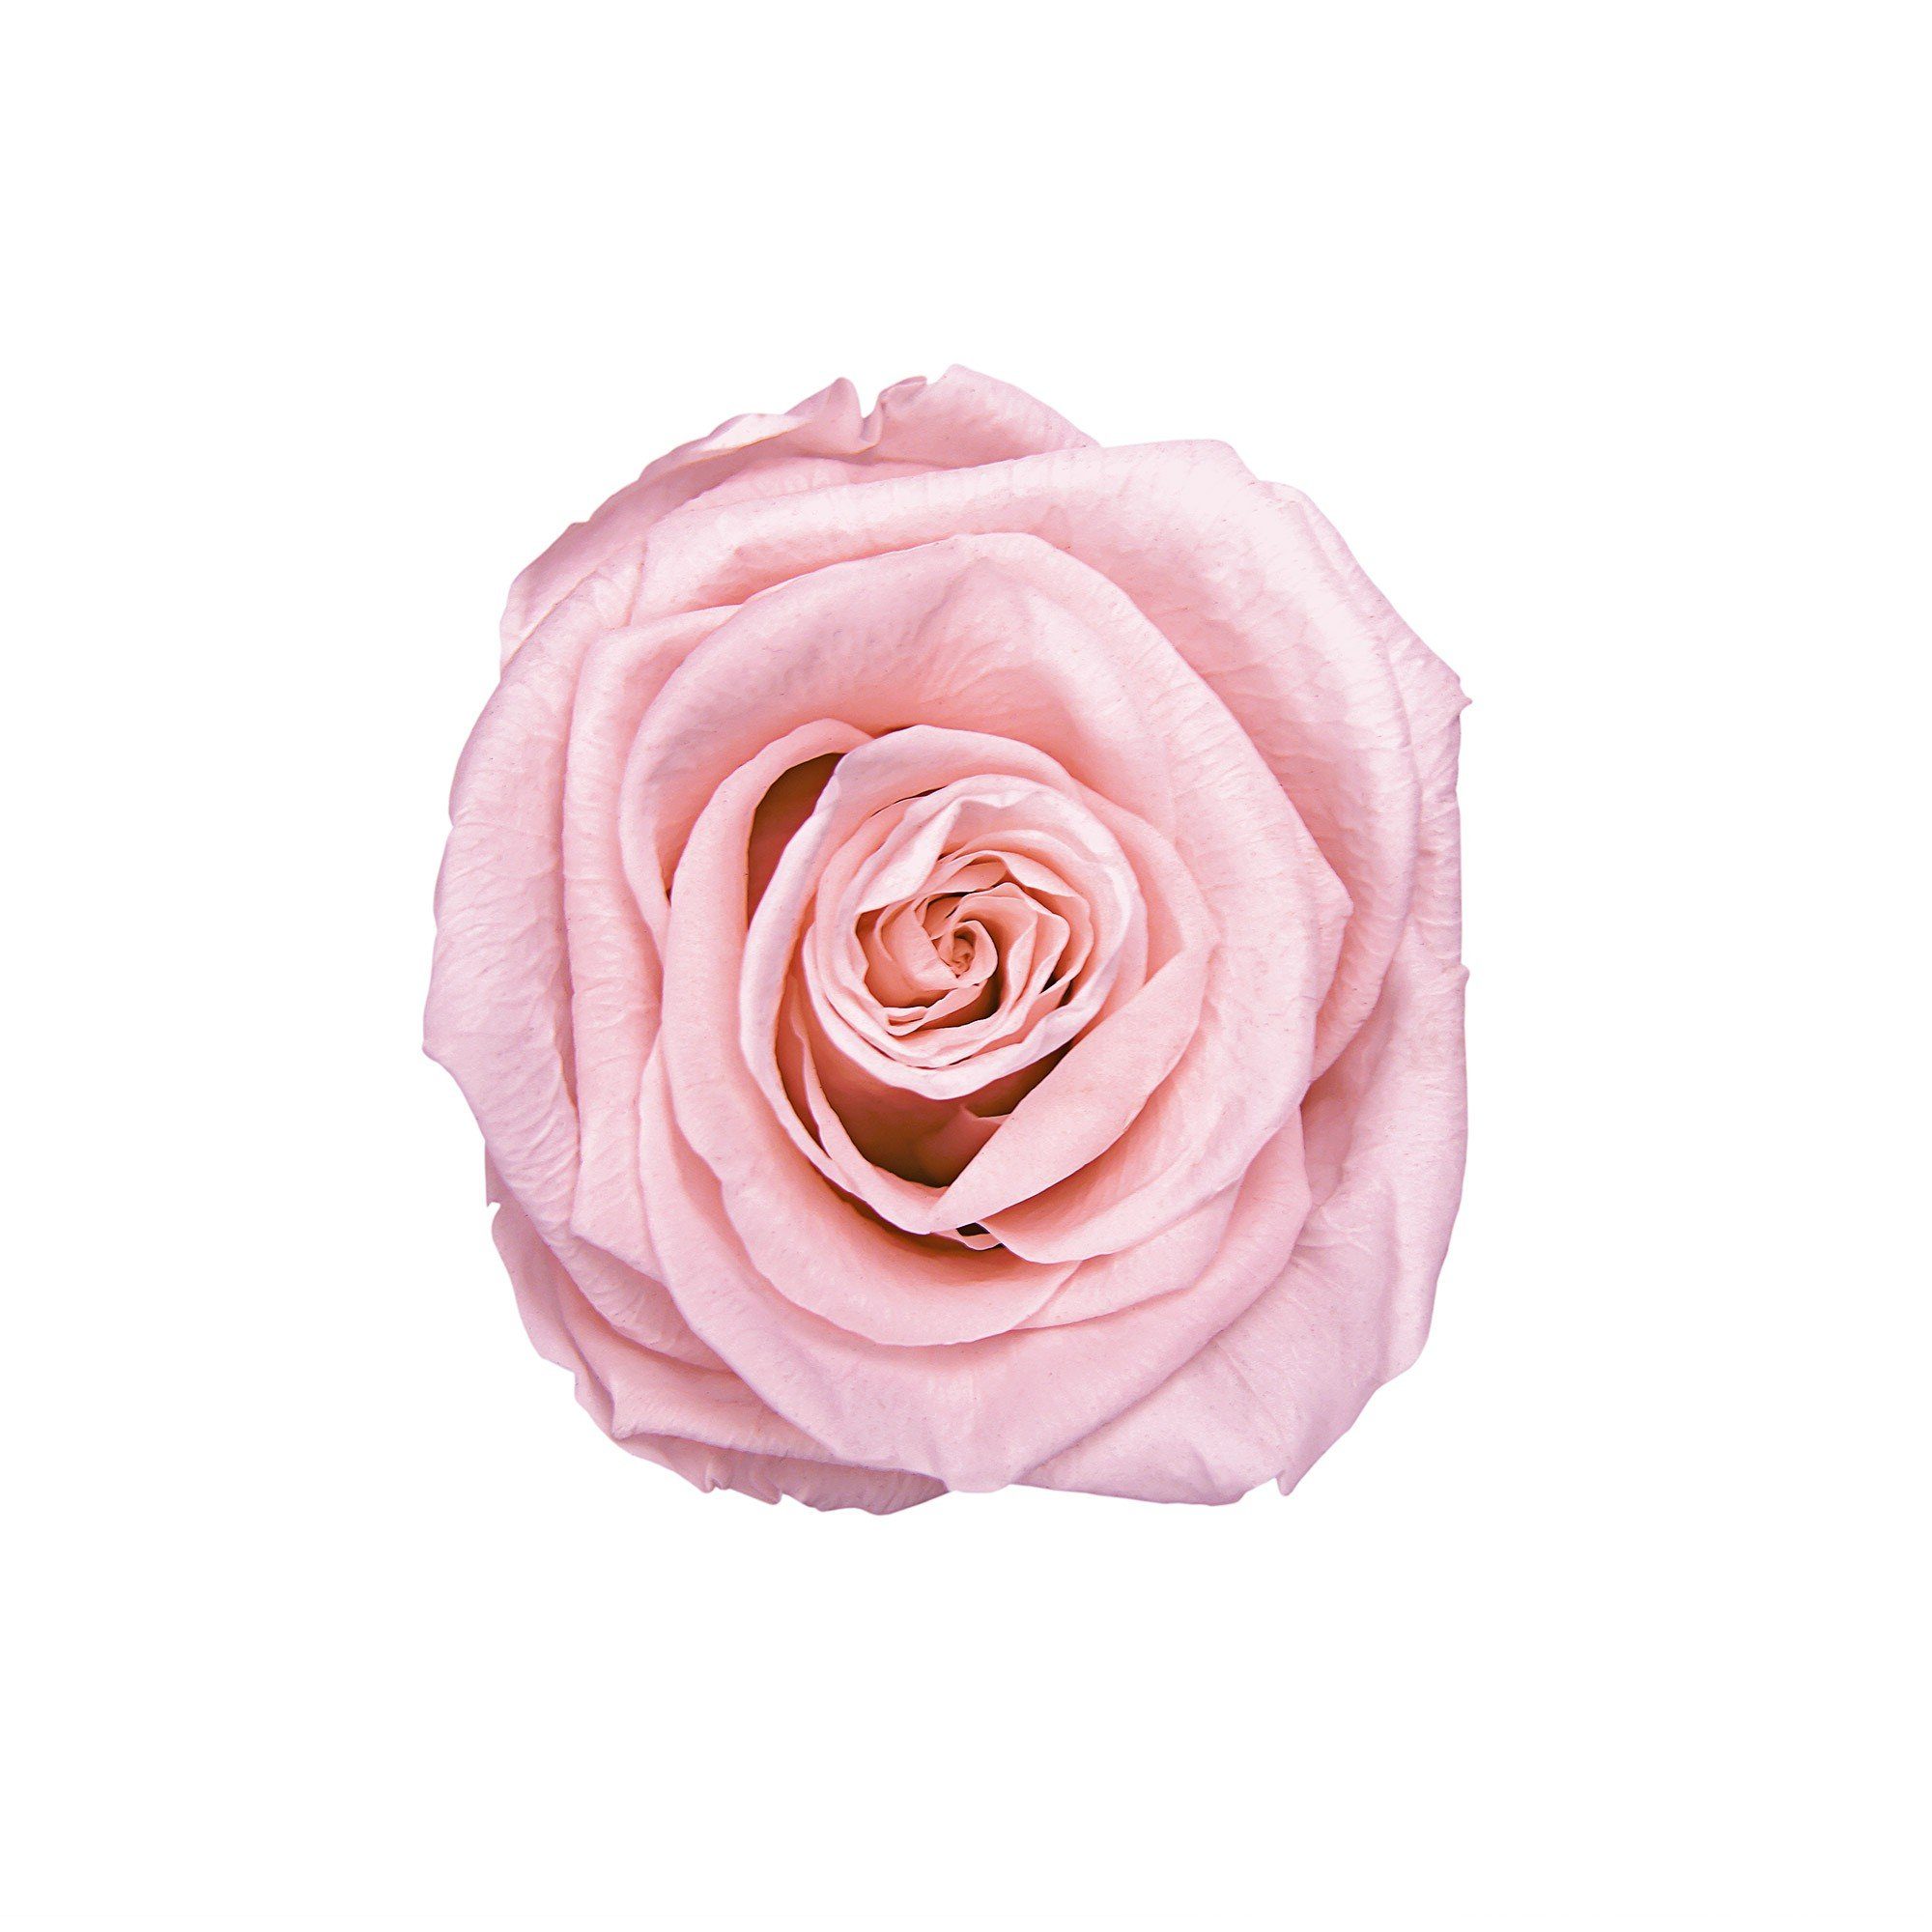 I Echte, I Raul by haltbar Infinity Holy Flowers, in weiß Blumen 3 1er duftende 9 Infinity Rose Blush cm mit Eckige konservierte Höhe Jahre Rosenbox Richter I Pink Kunstblume Rose,